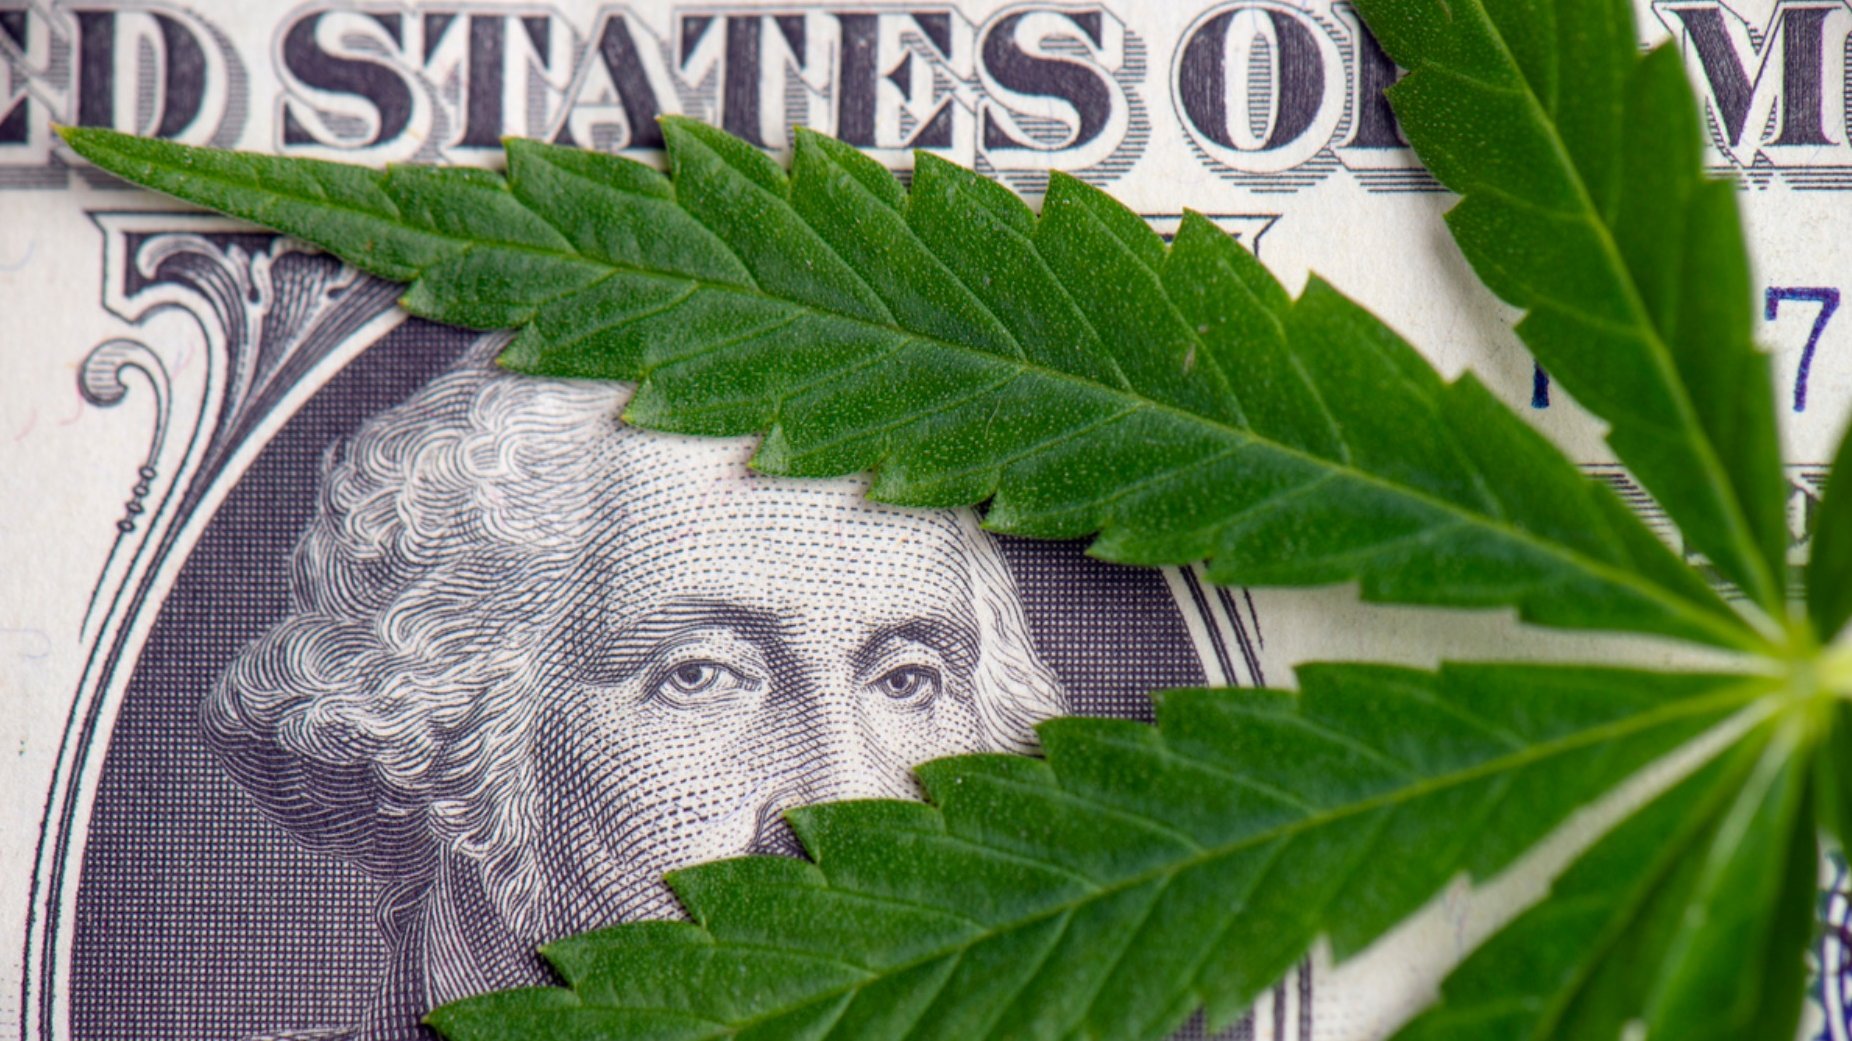 George Washington bill peeking through a marijuana leaf